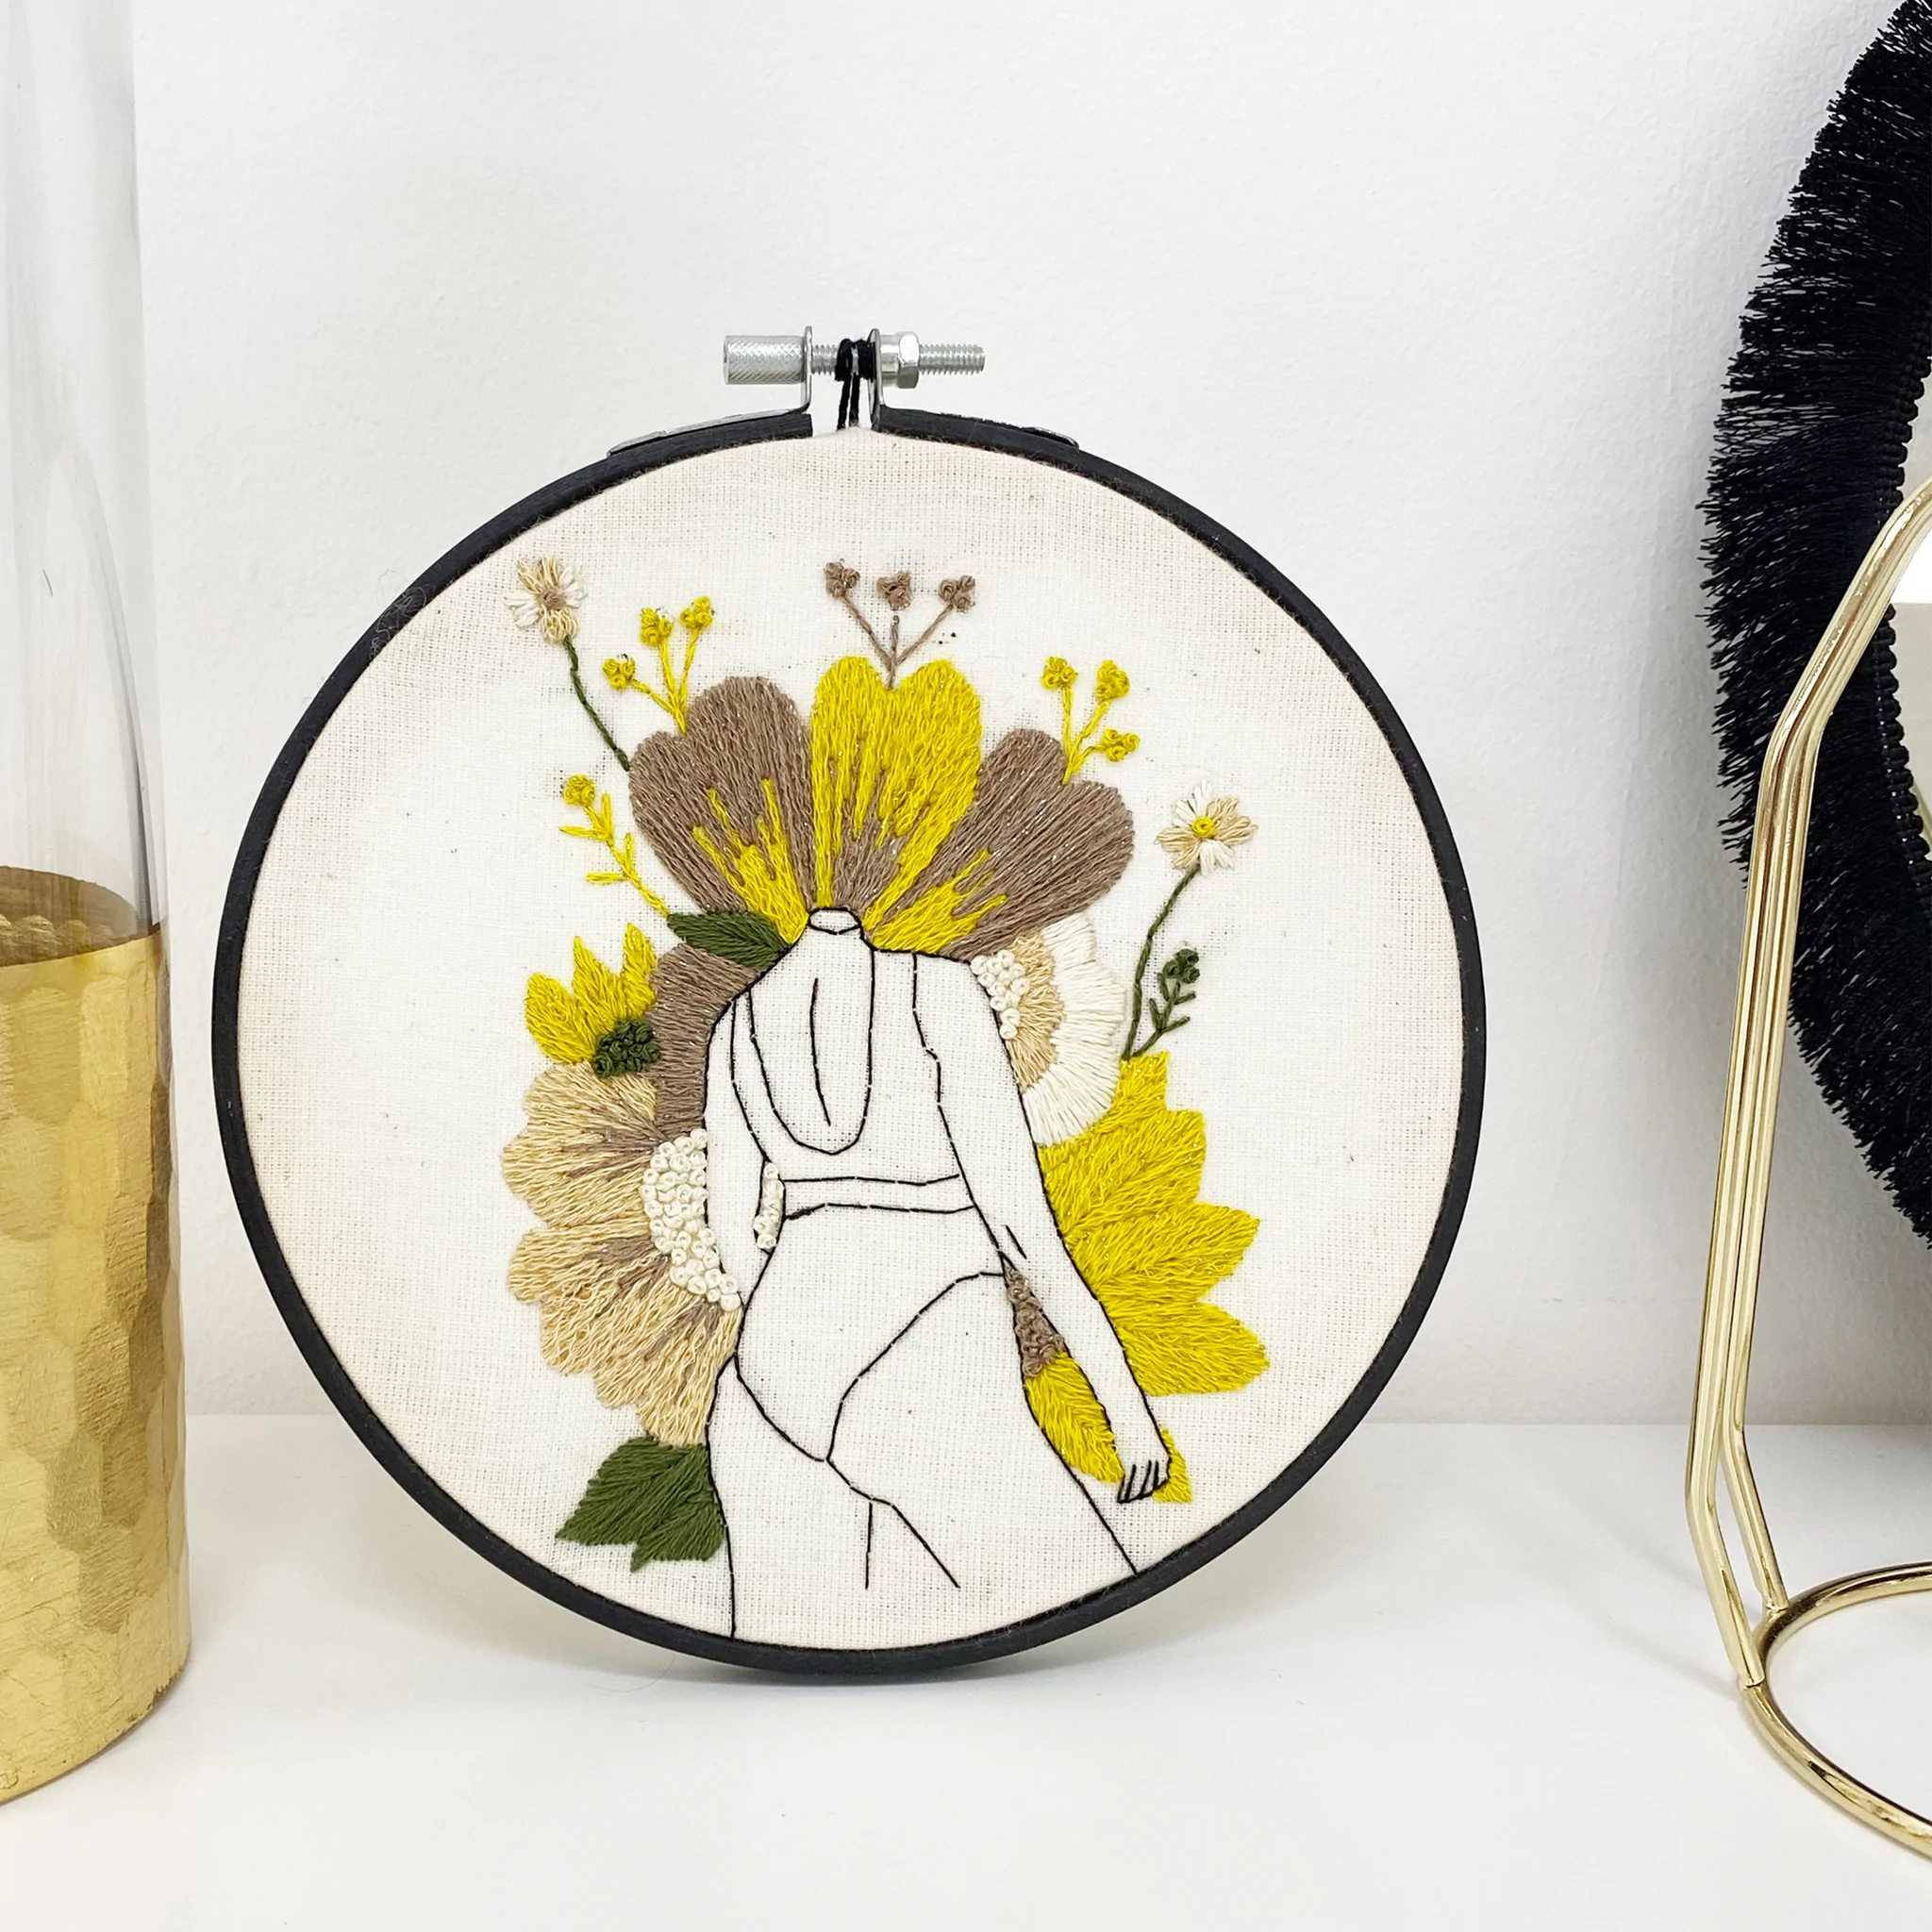 Celebrate female - embroidery kit